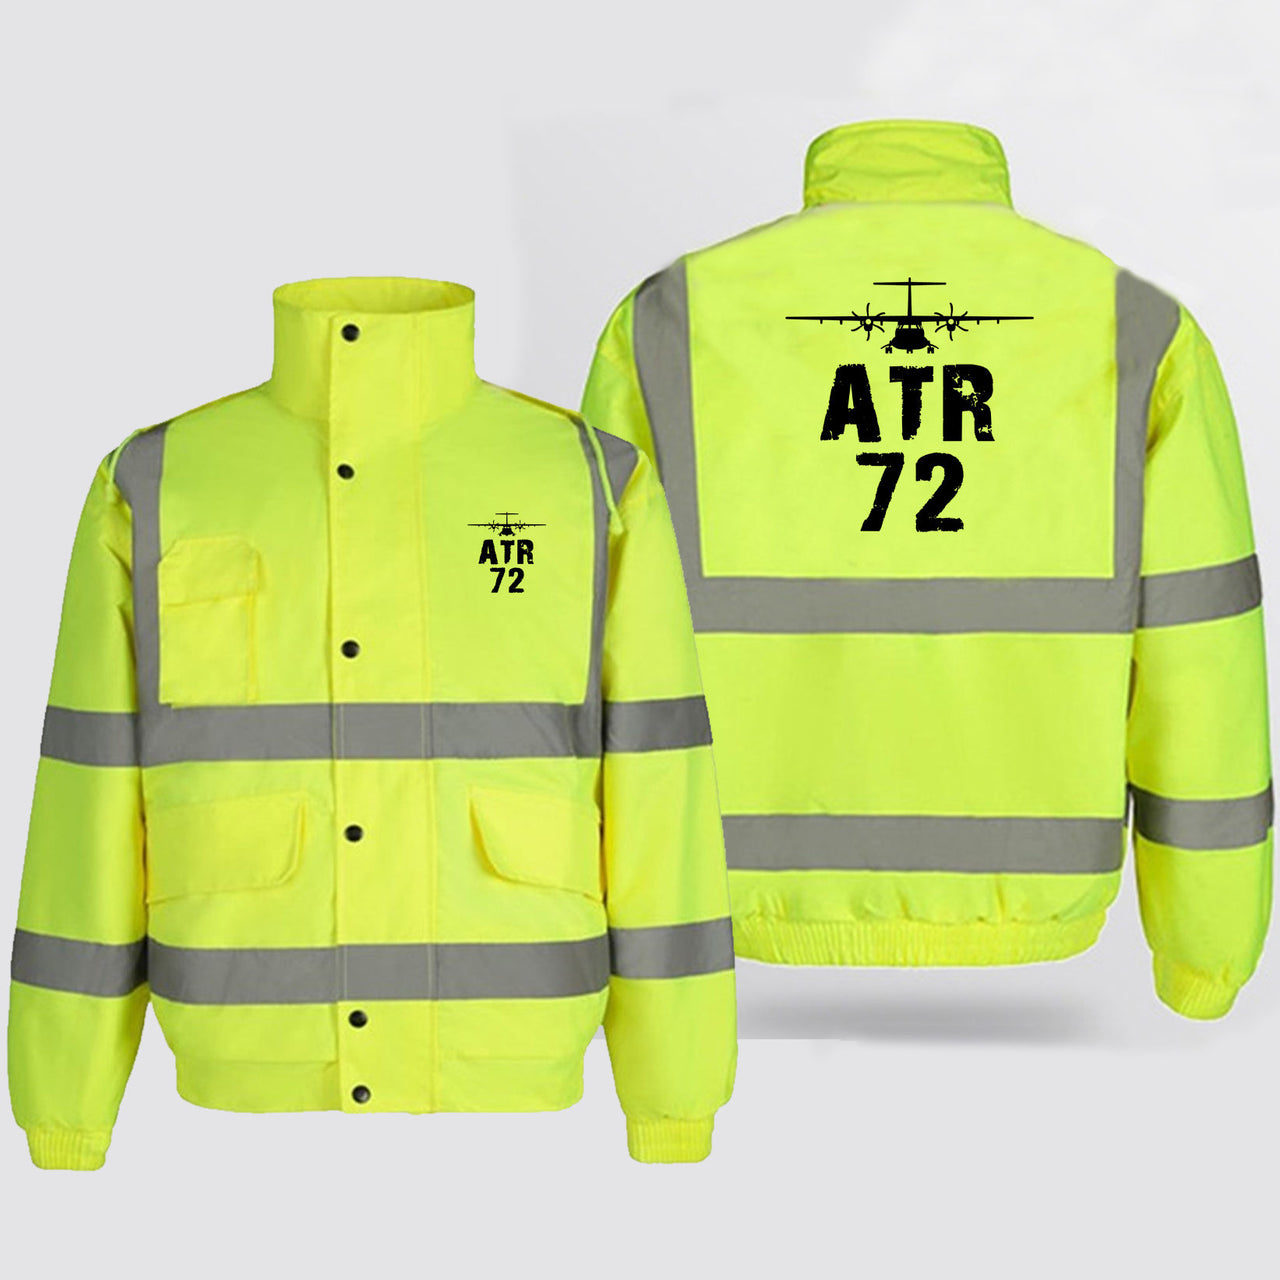 ATR-72 & Plane Designed Reflective Winter Jackets